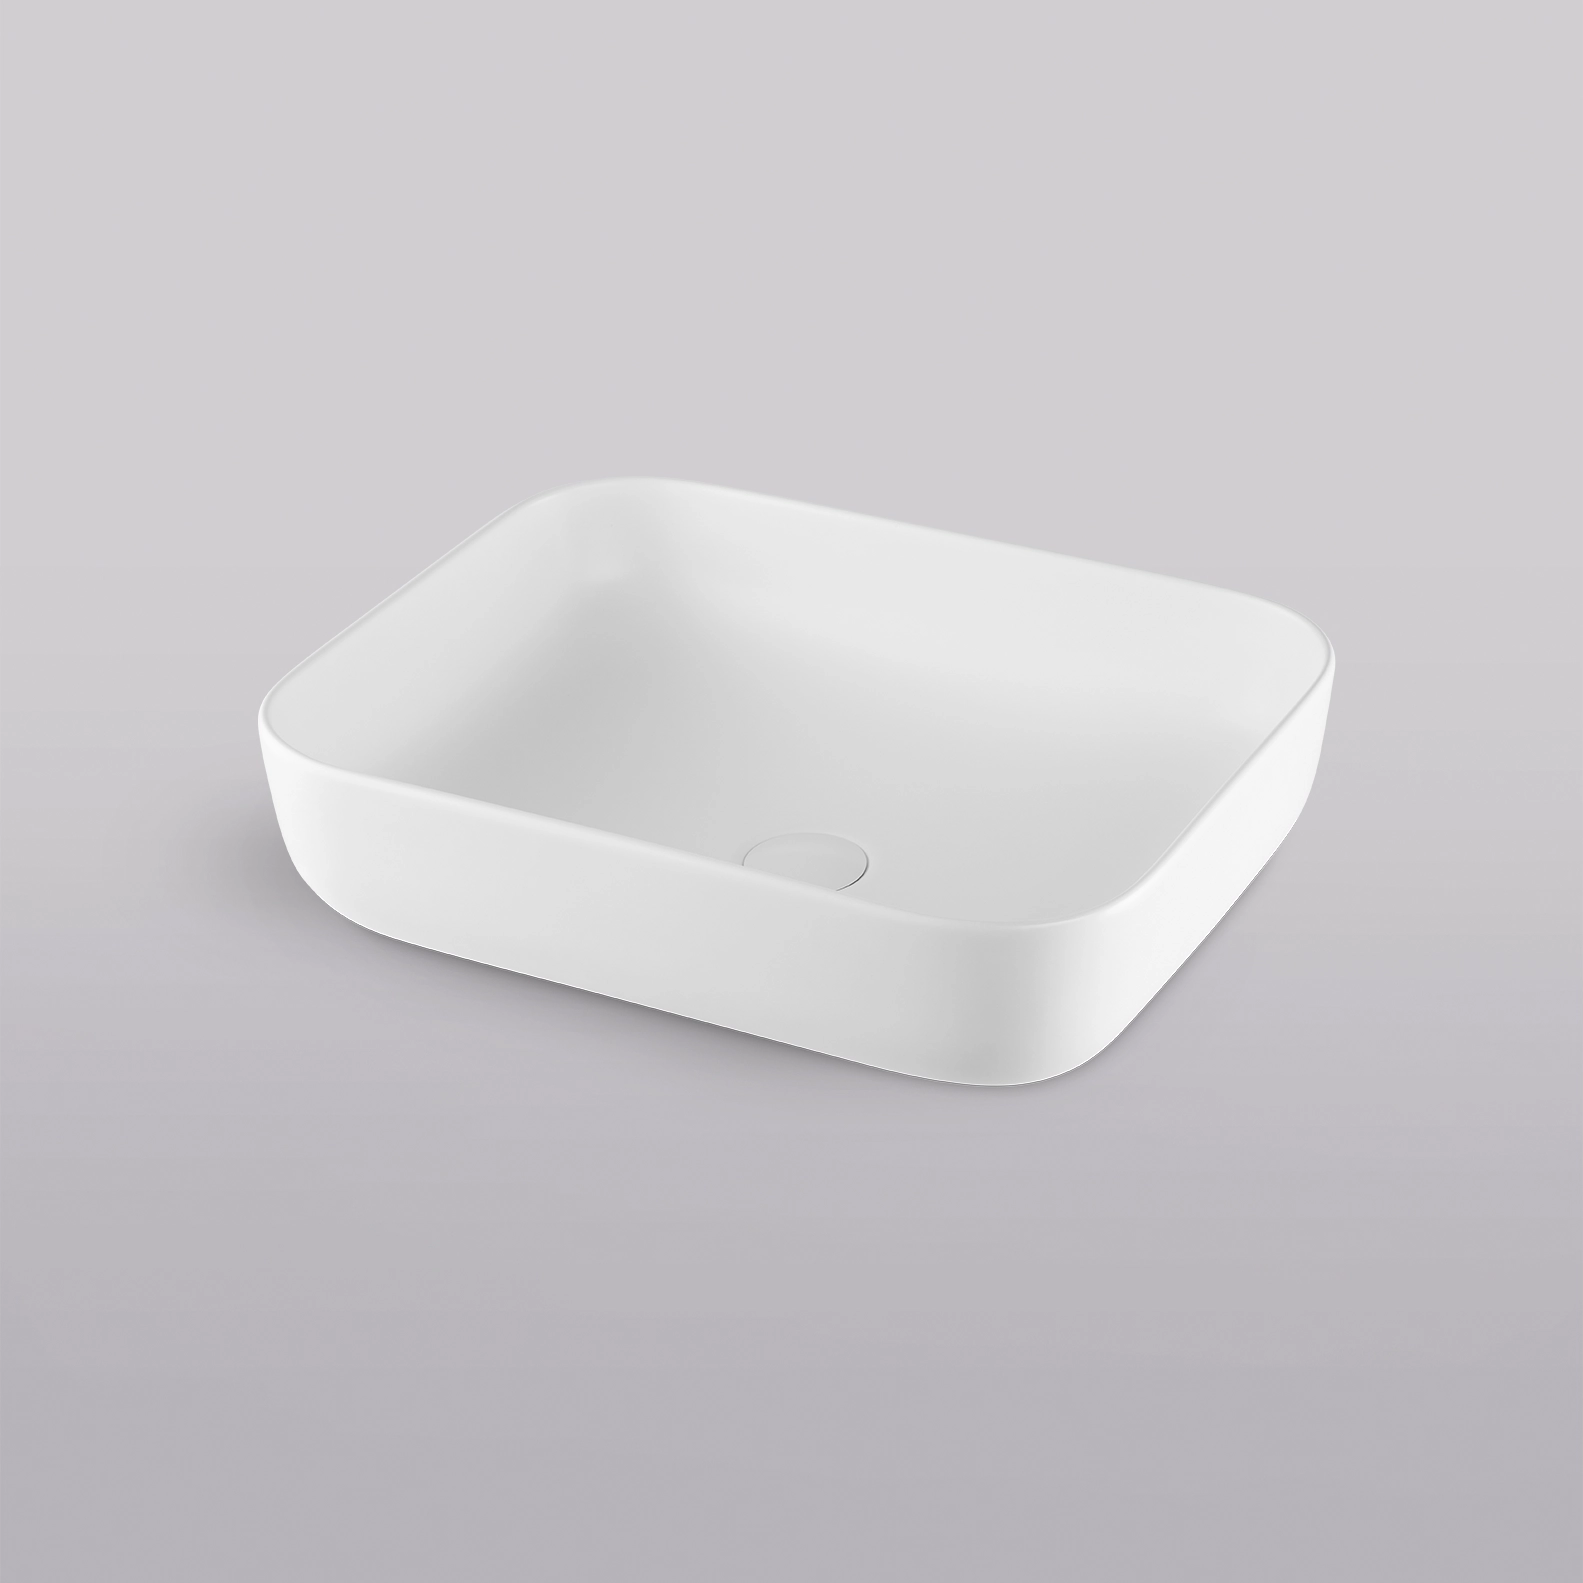 Lavabos Cerazul - lavabo blanco mate formato rectangular de cantos redondeados